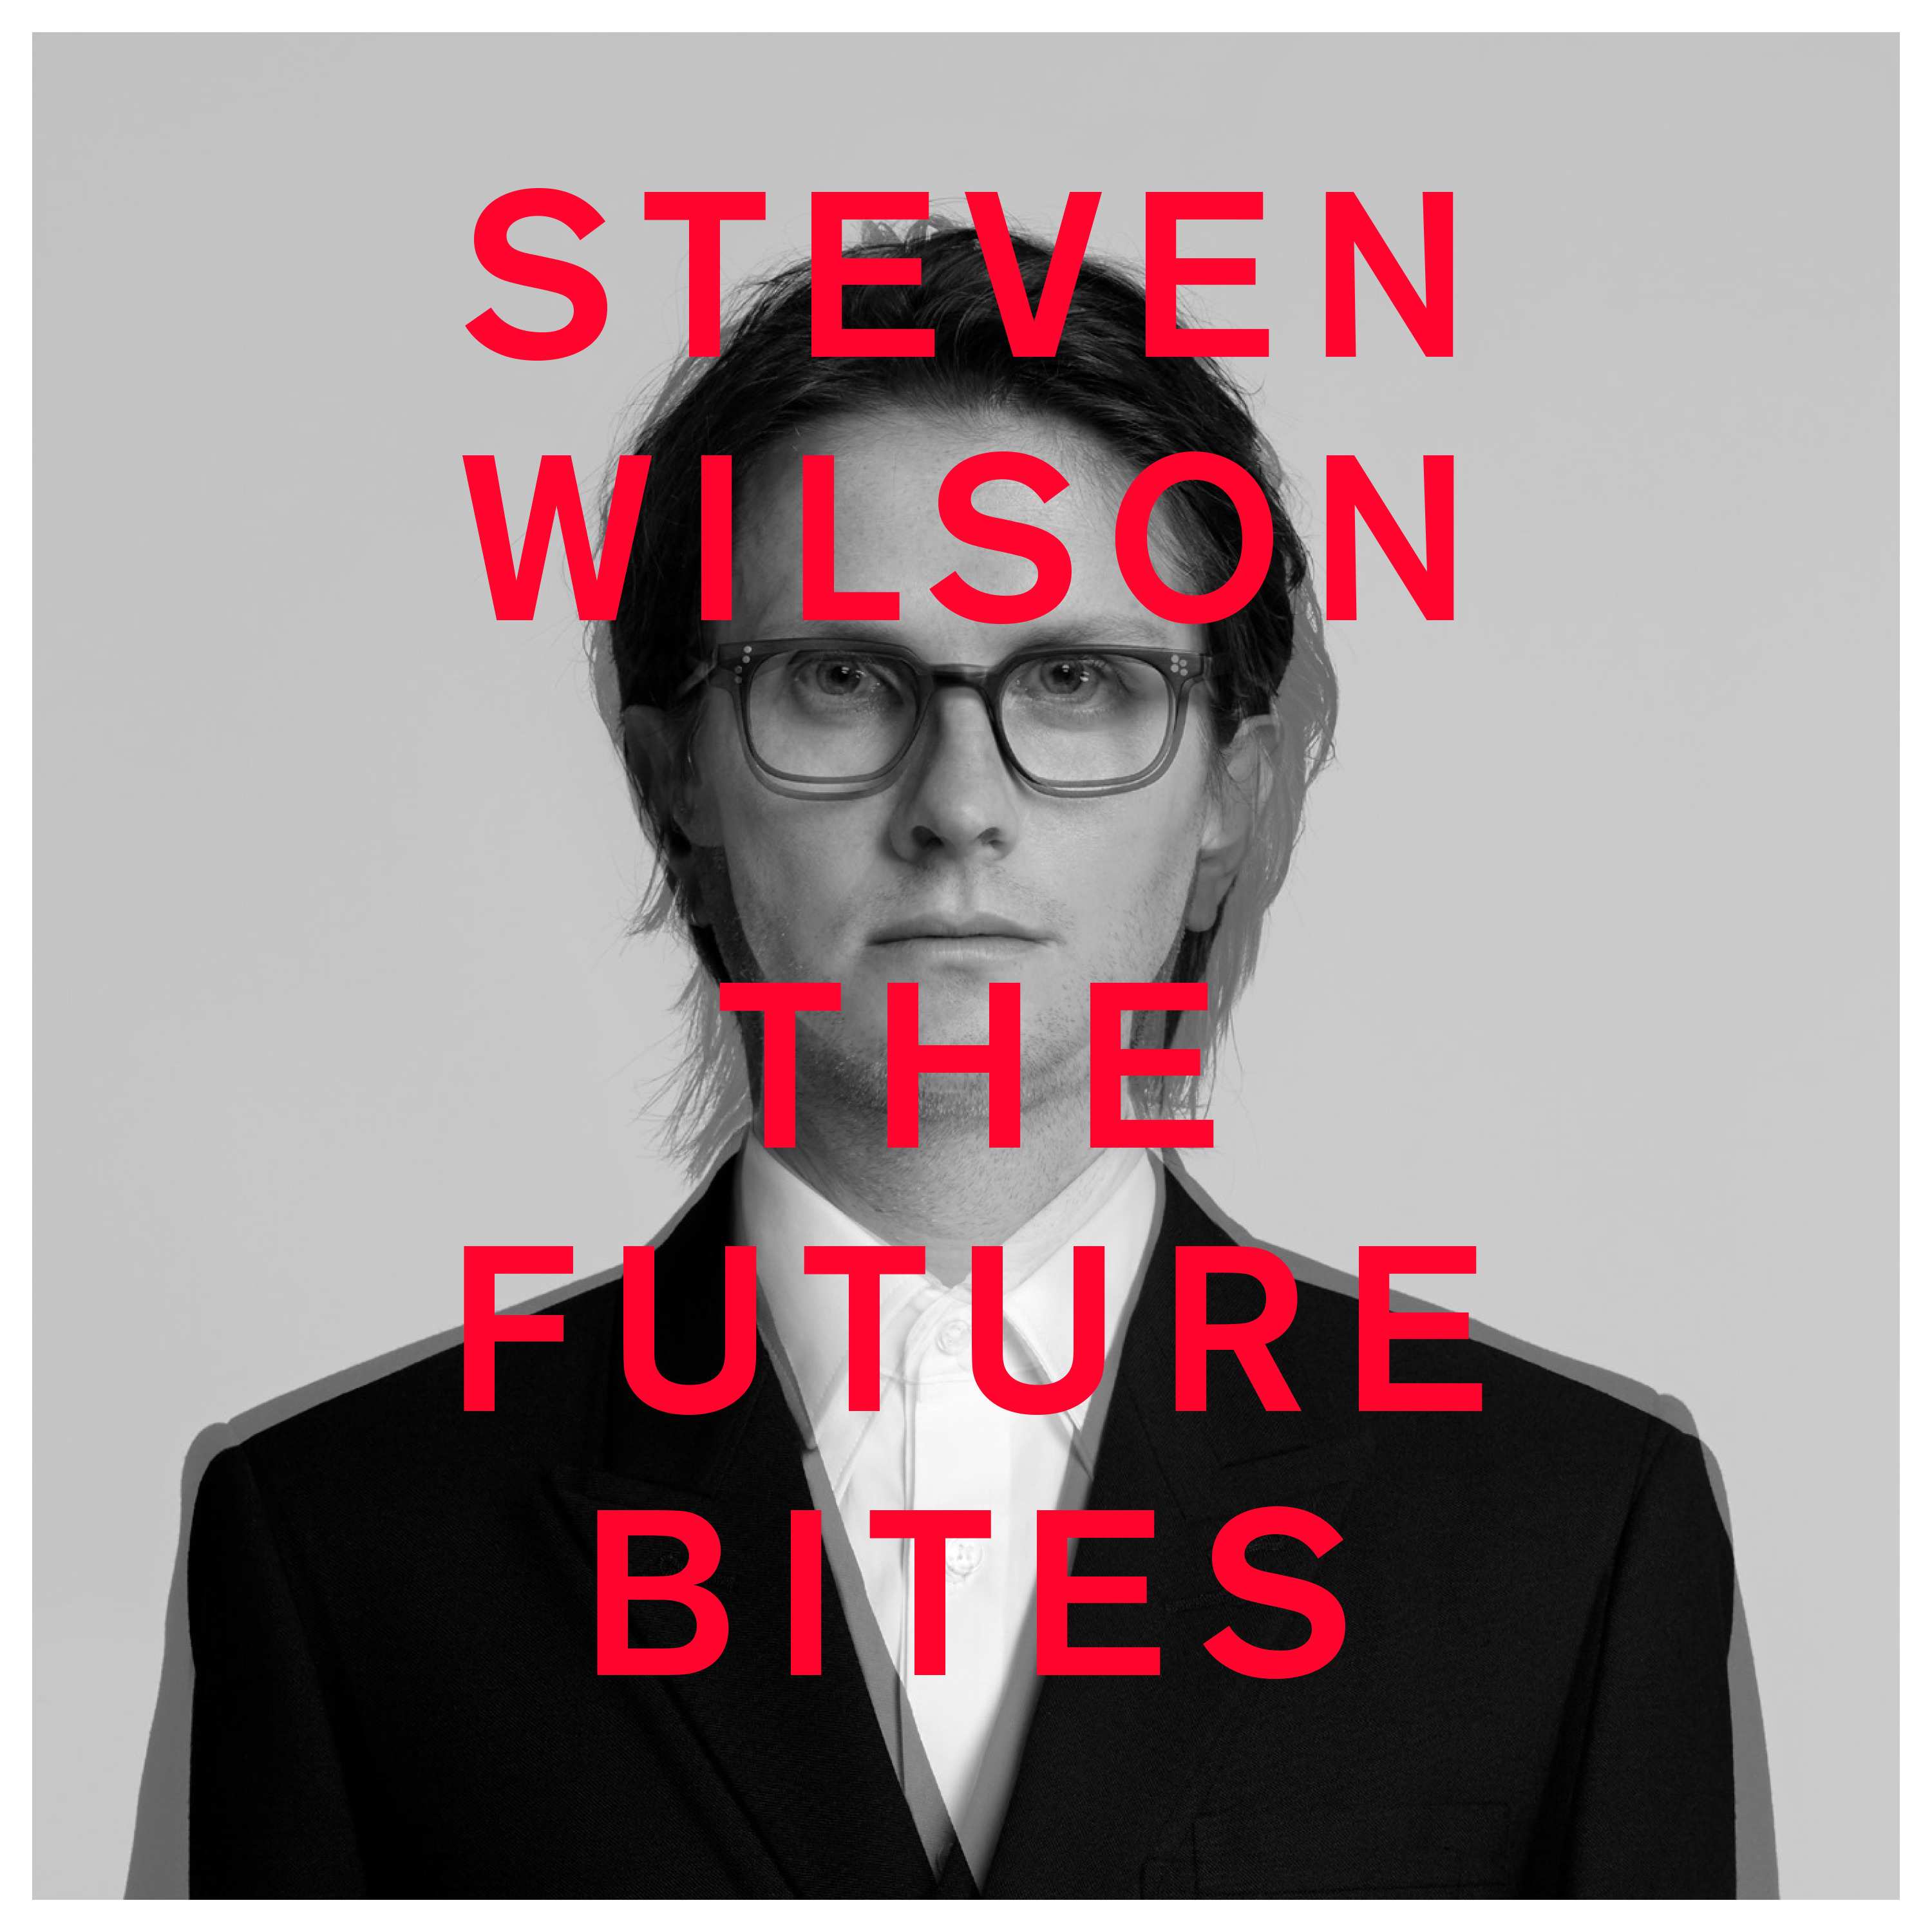 Steven Wilson - THE FUTURE BITES (With Instrumental) (2021) [FLAC 24bit/96kHz]